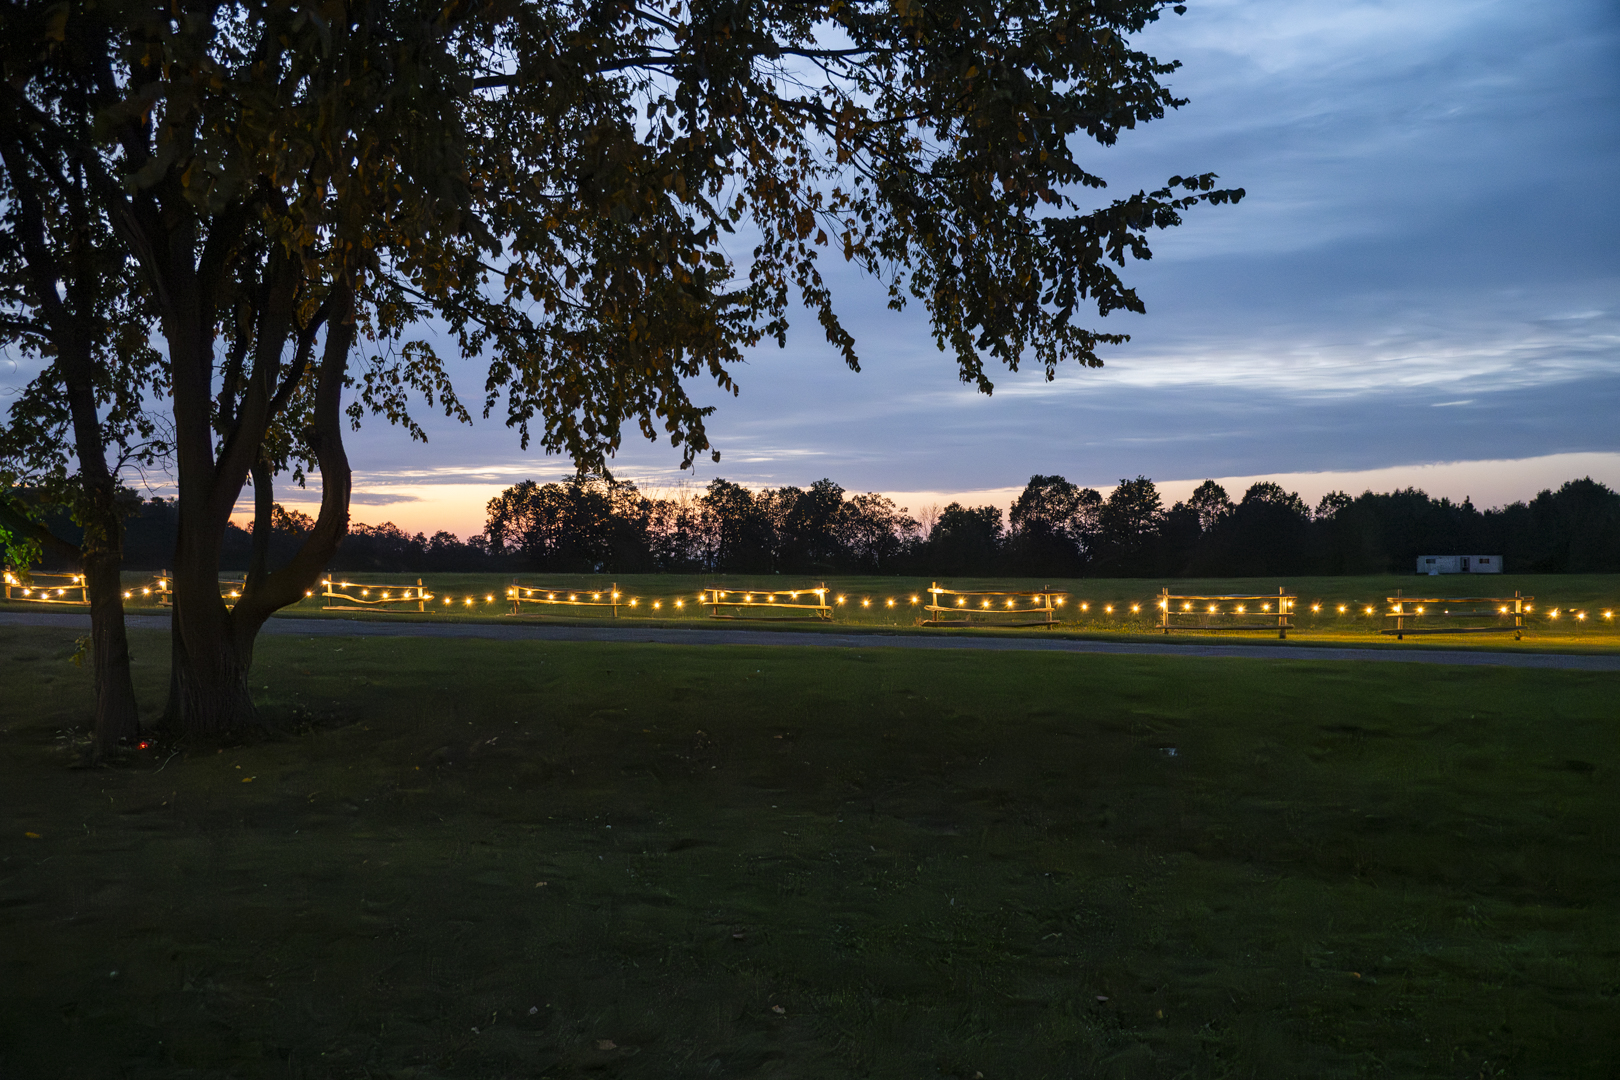 String lights adorn a fence along field